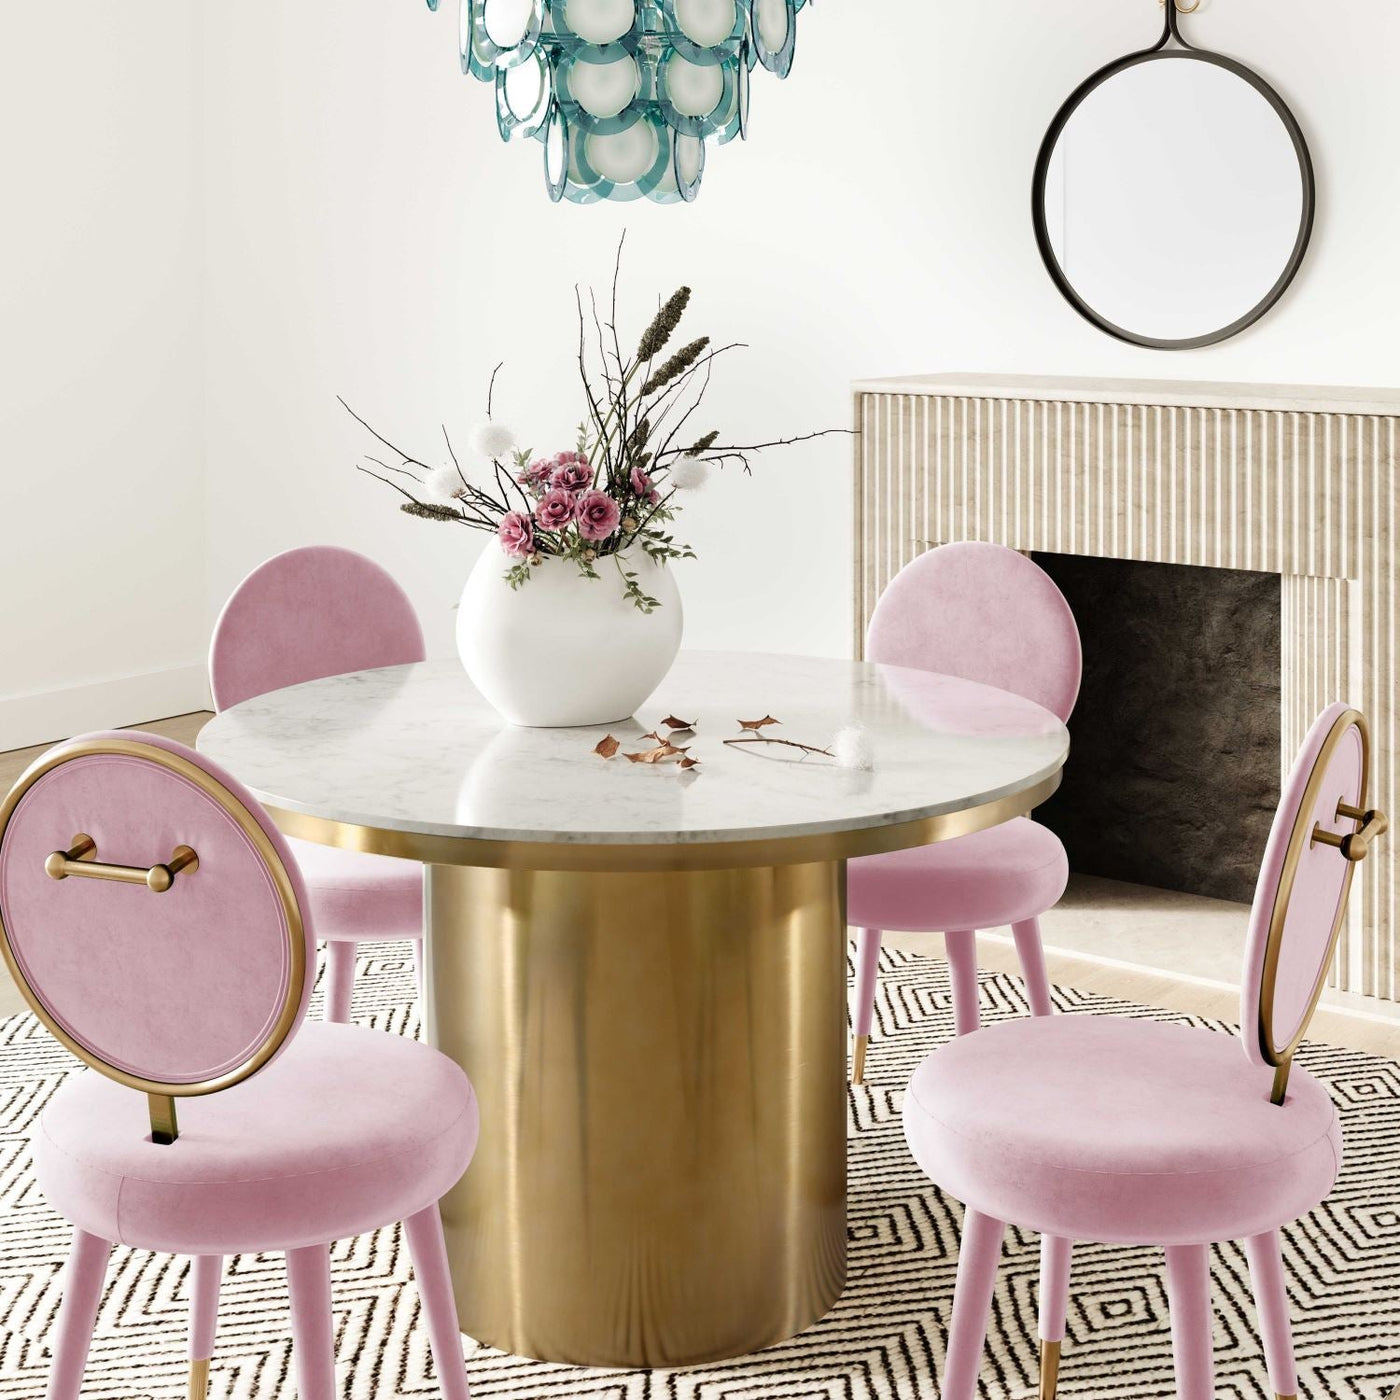 Marisbu Velvet Dining Chair - Bubble Gum